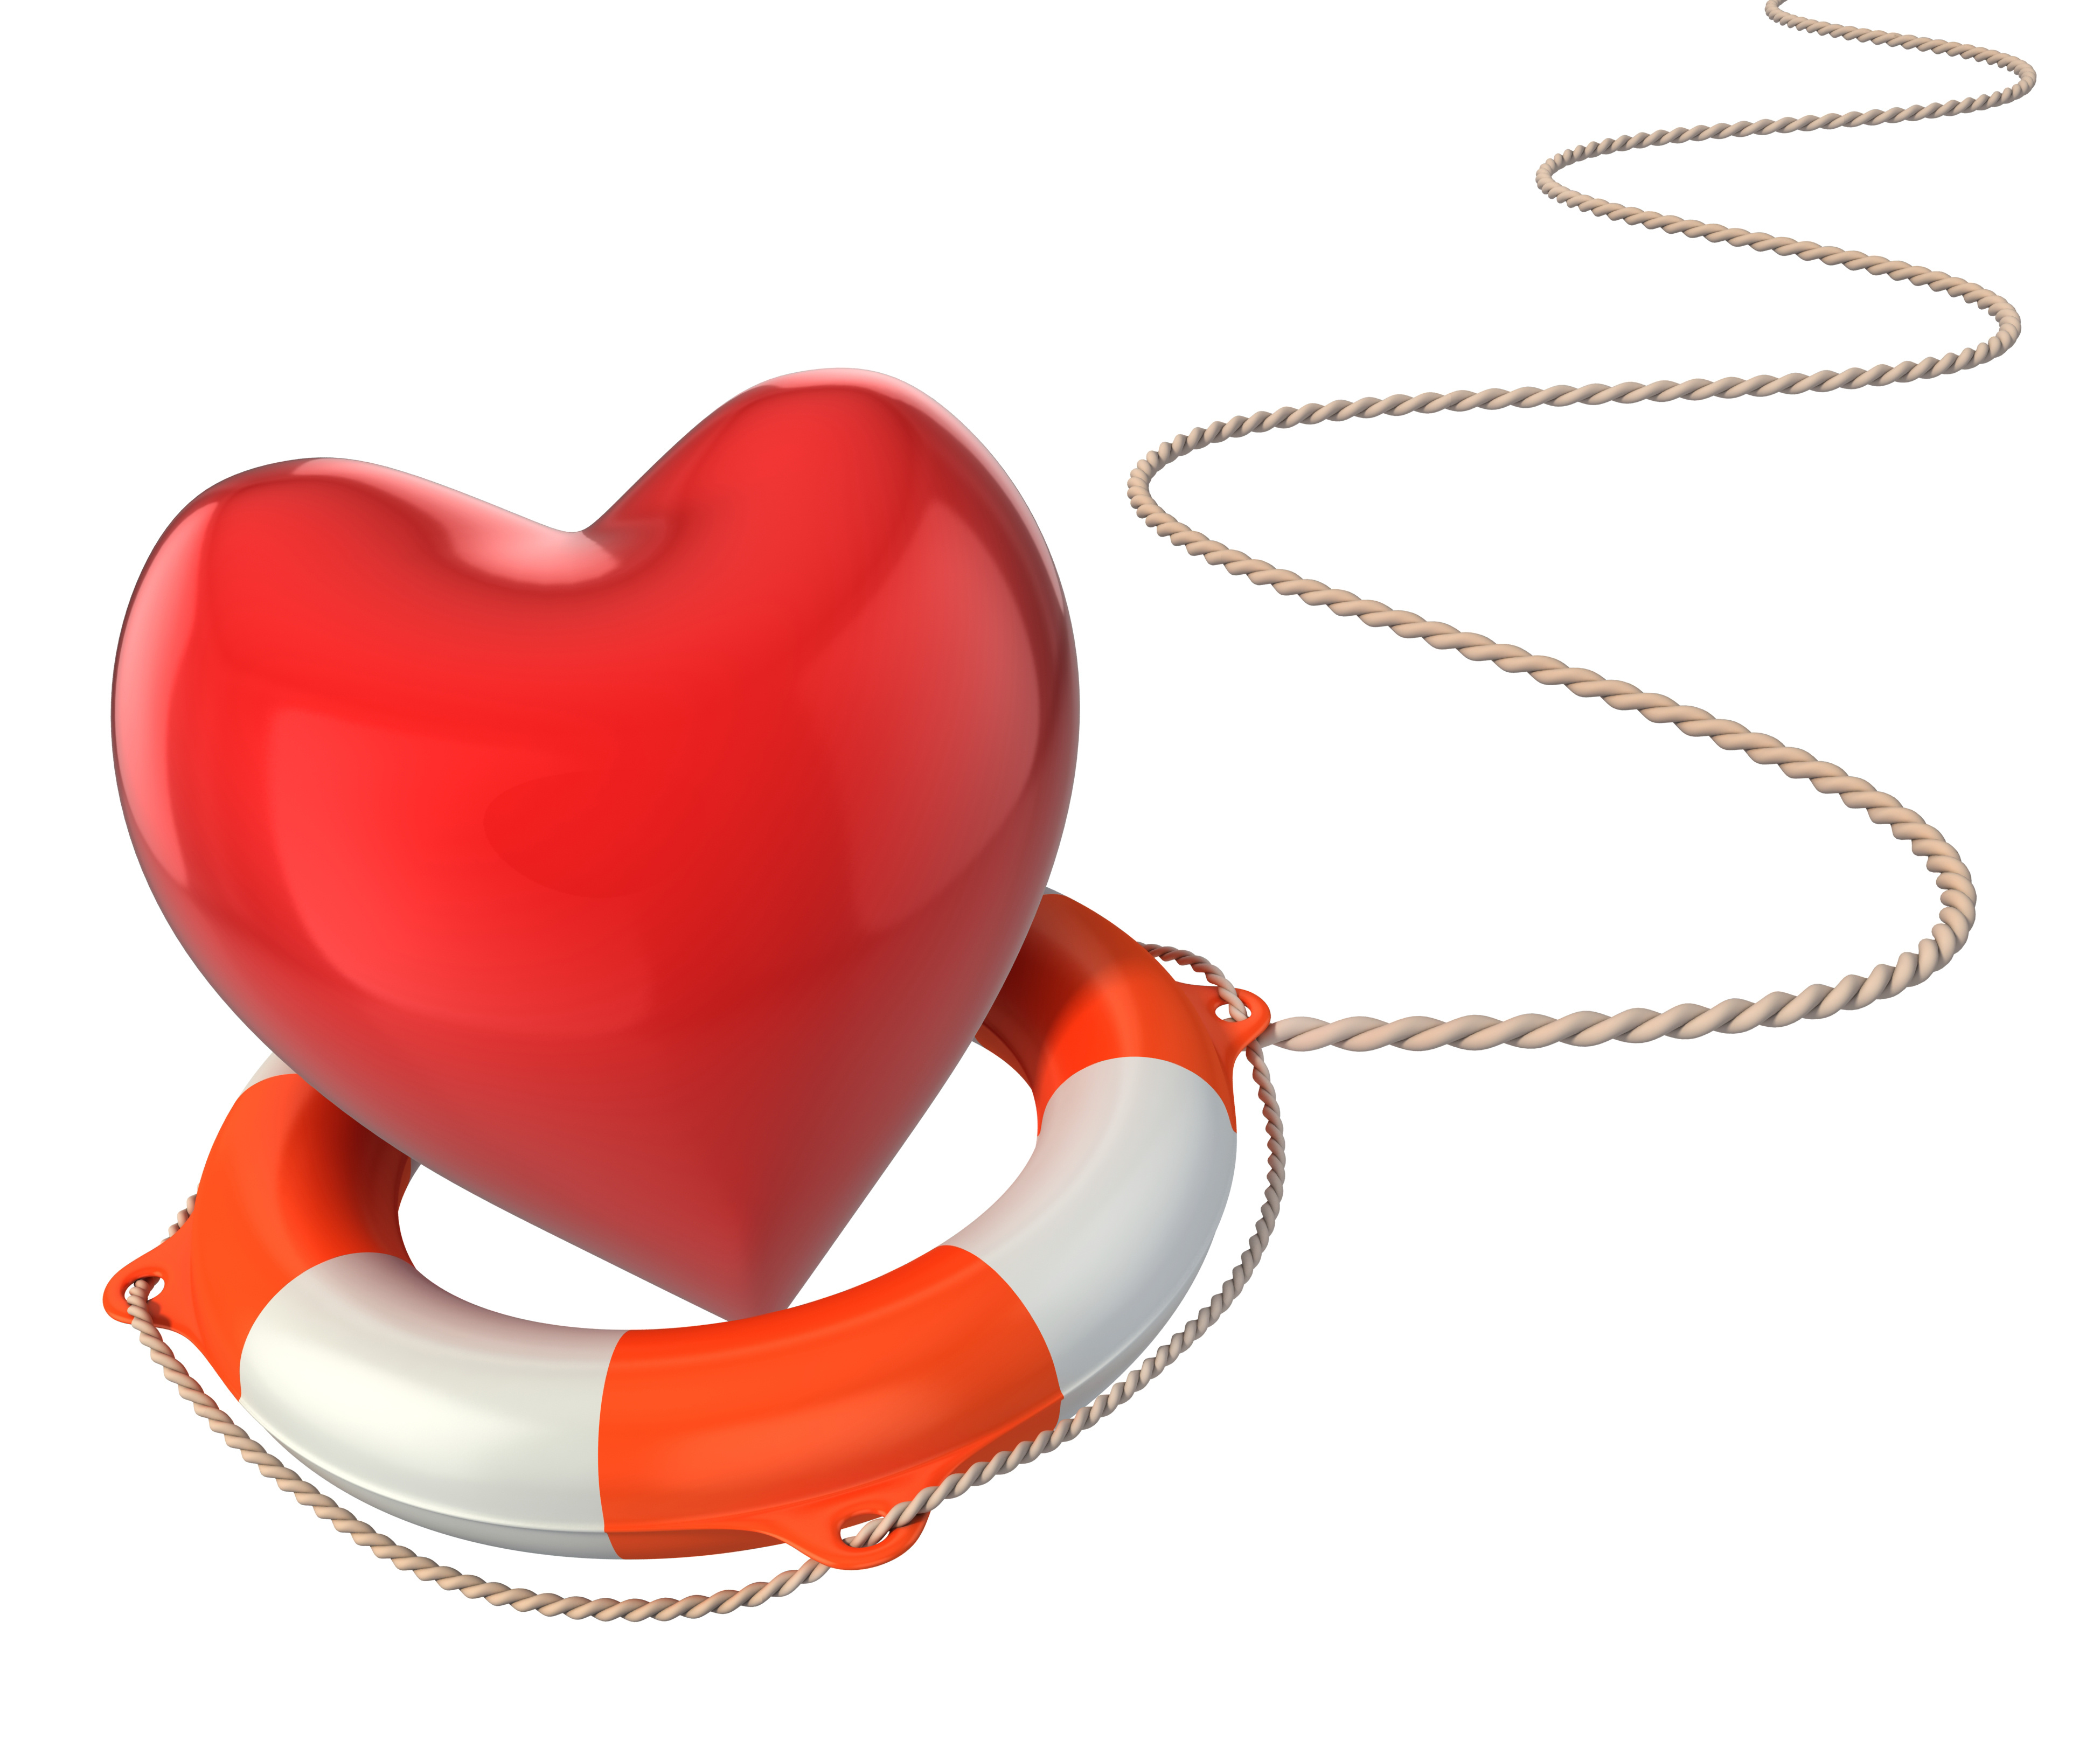 saving love marriage relationship - heart on lifebuoy